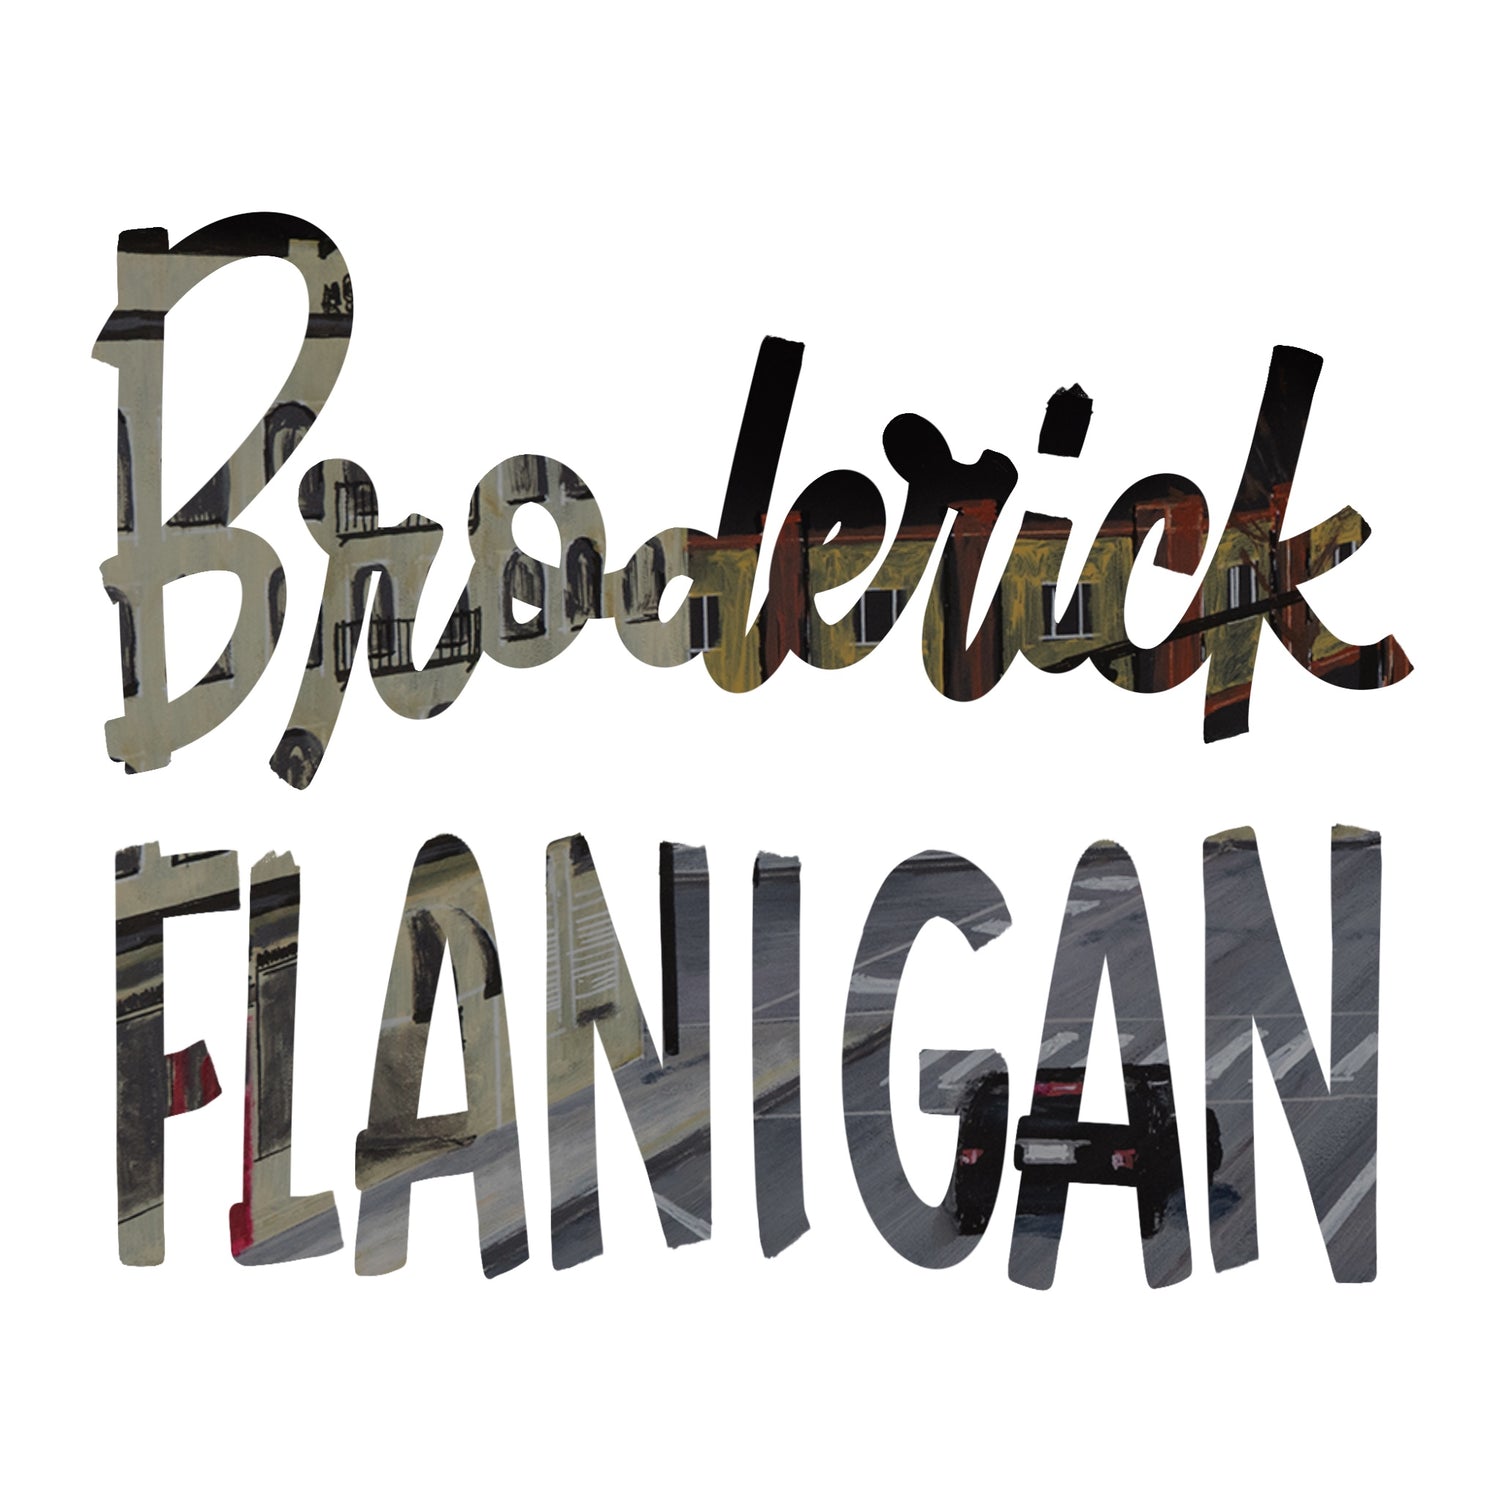 Broderick Flanigan